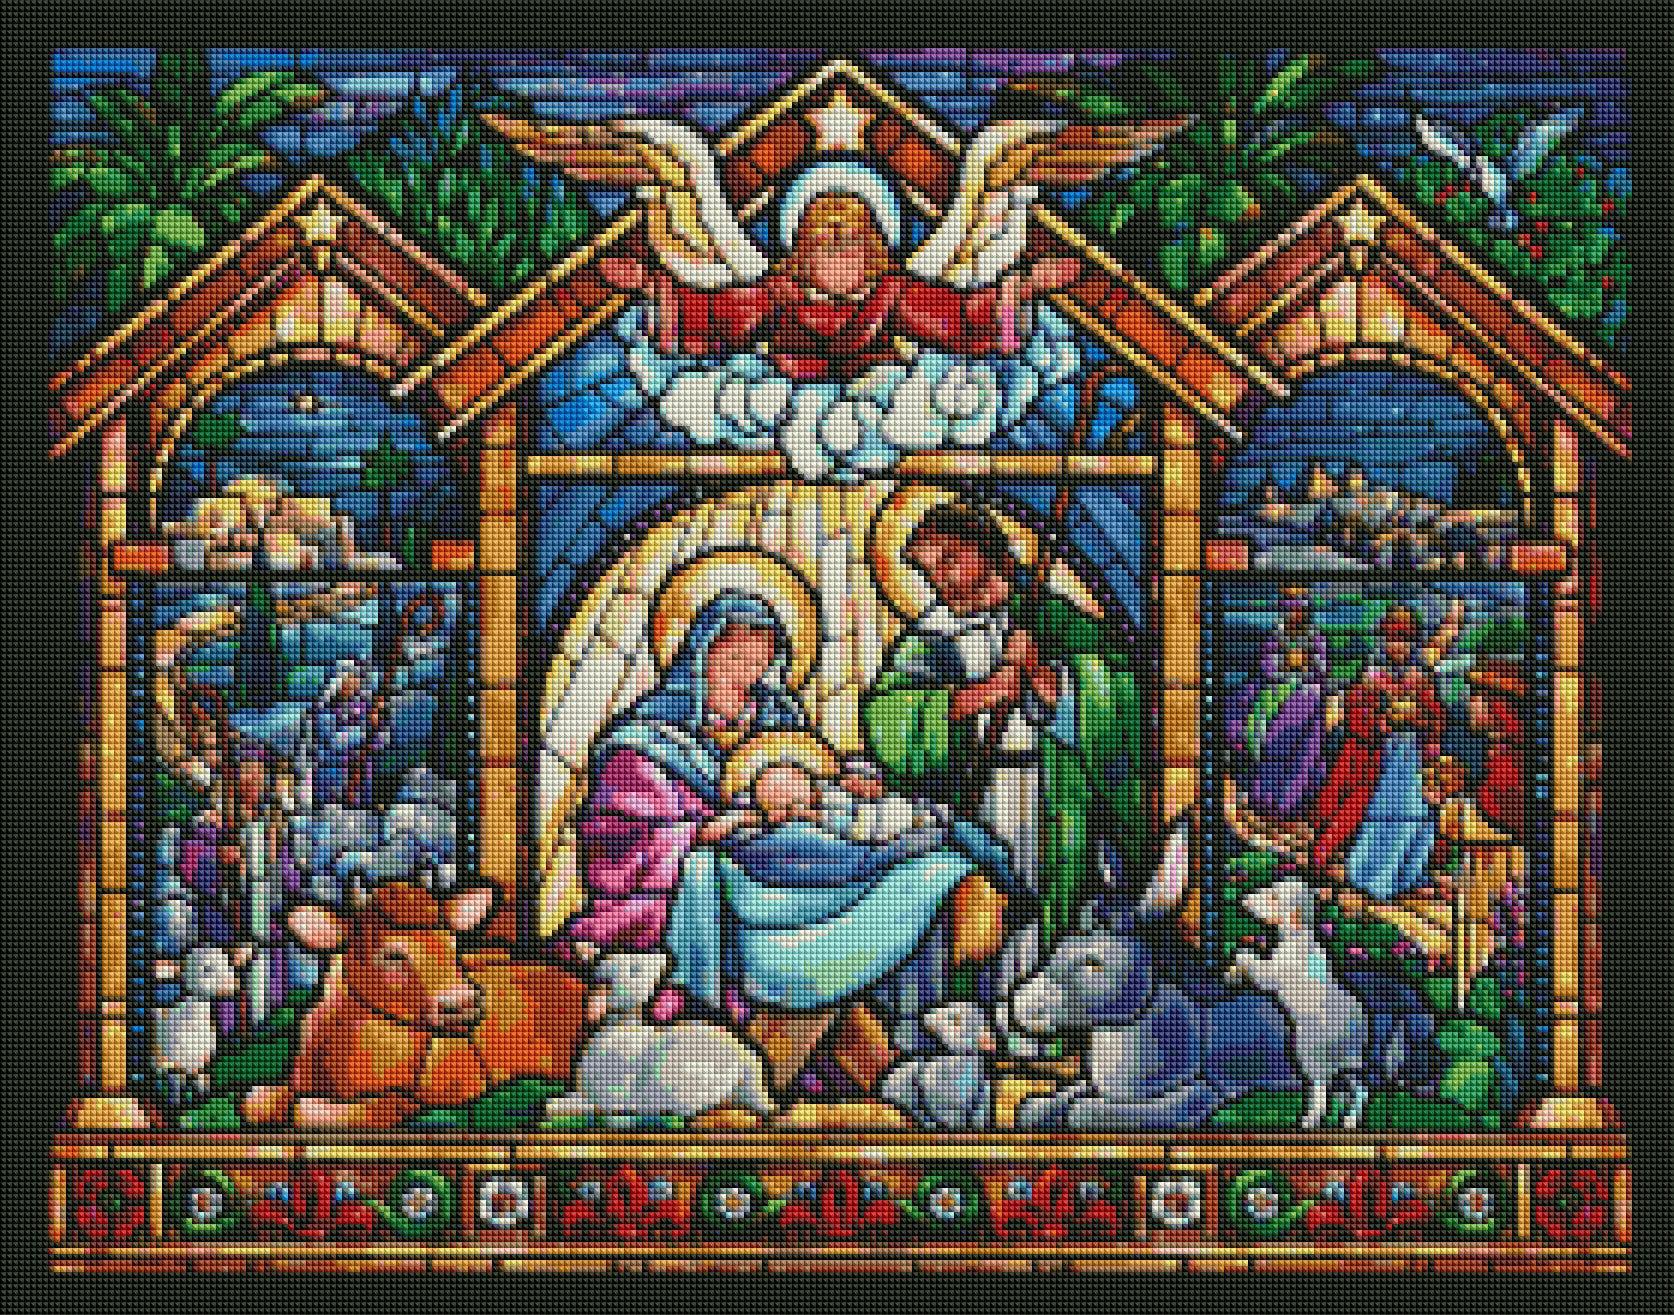 Stained Glass Nativity Scene-Diamond Painting Kit-Heartful Diamonds